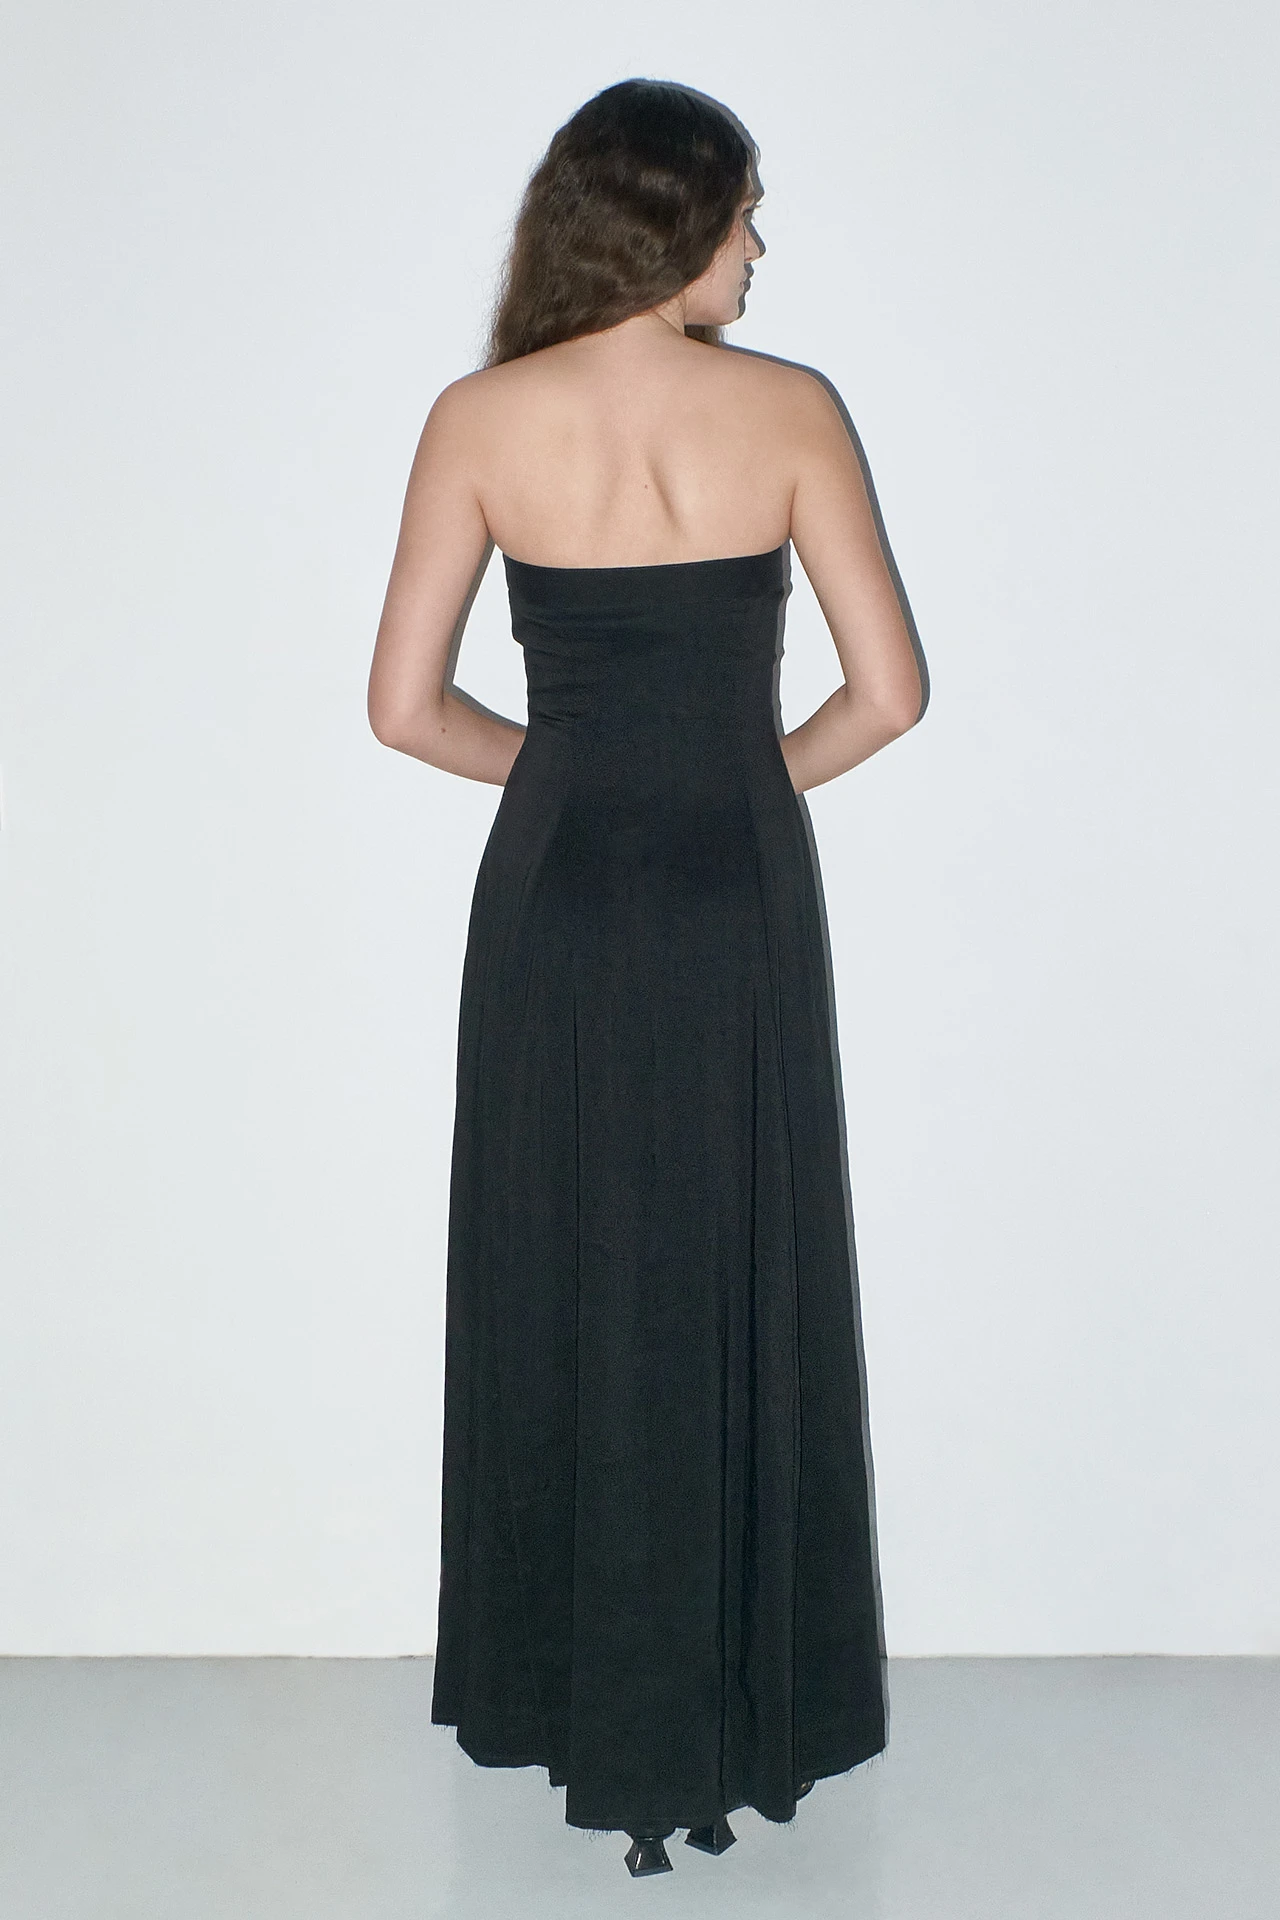 EC-miista-lin-black-dress-06